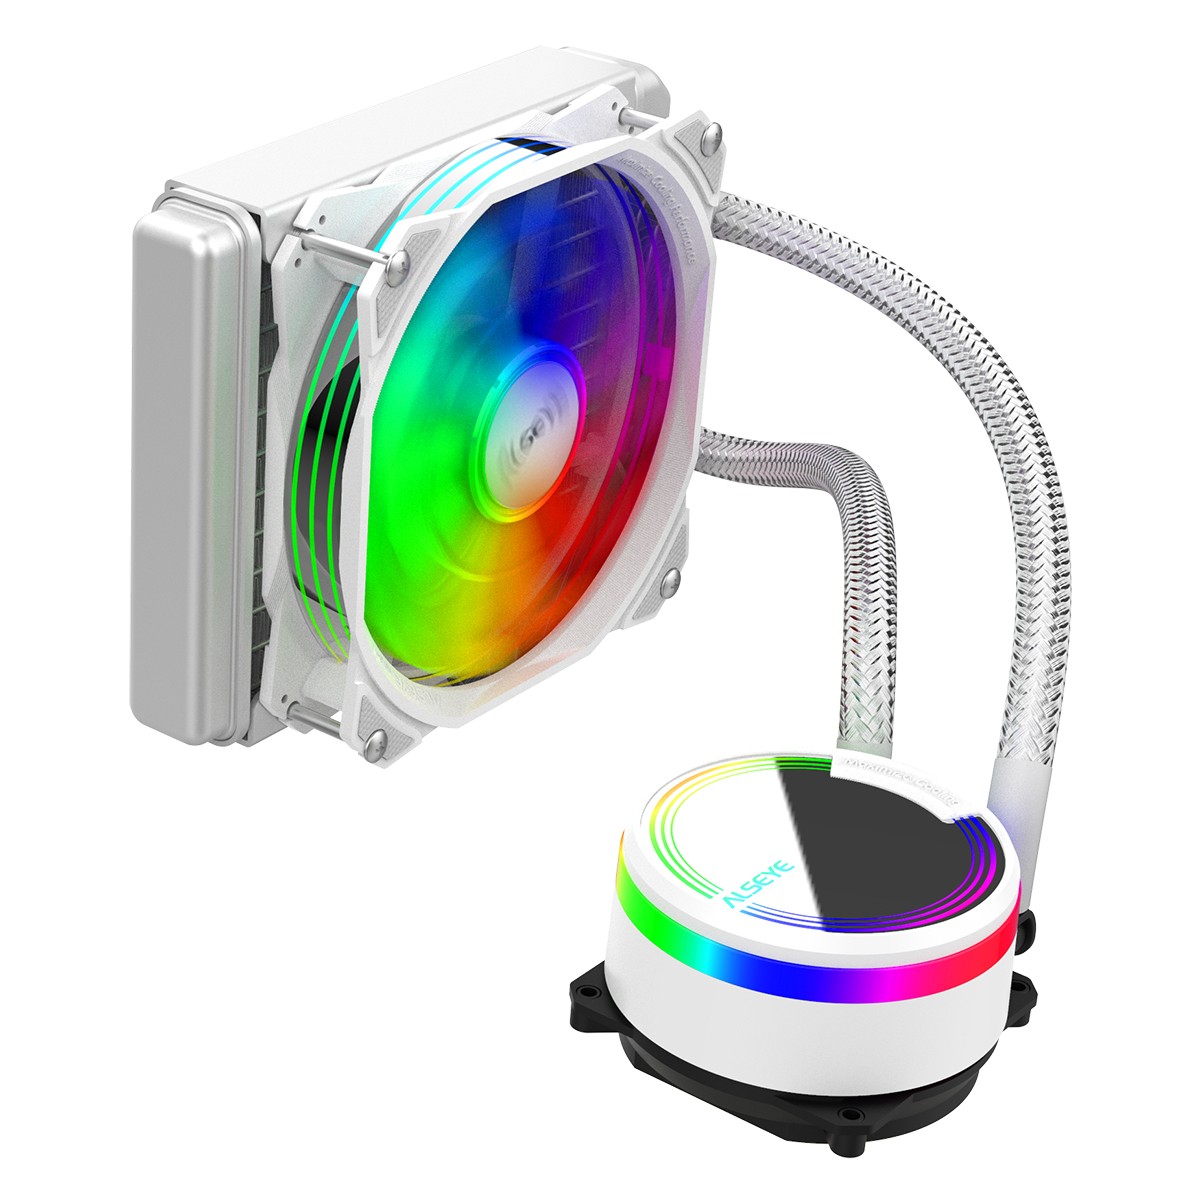 Water Cooler Alseye M120 White, 120mm, RGB, Intel-AMD